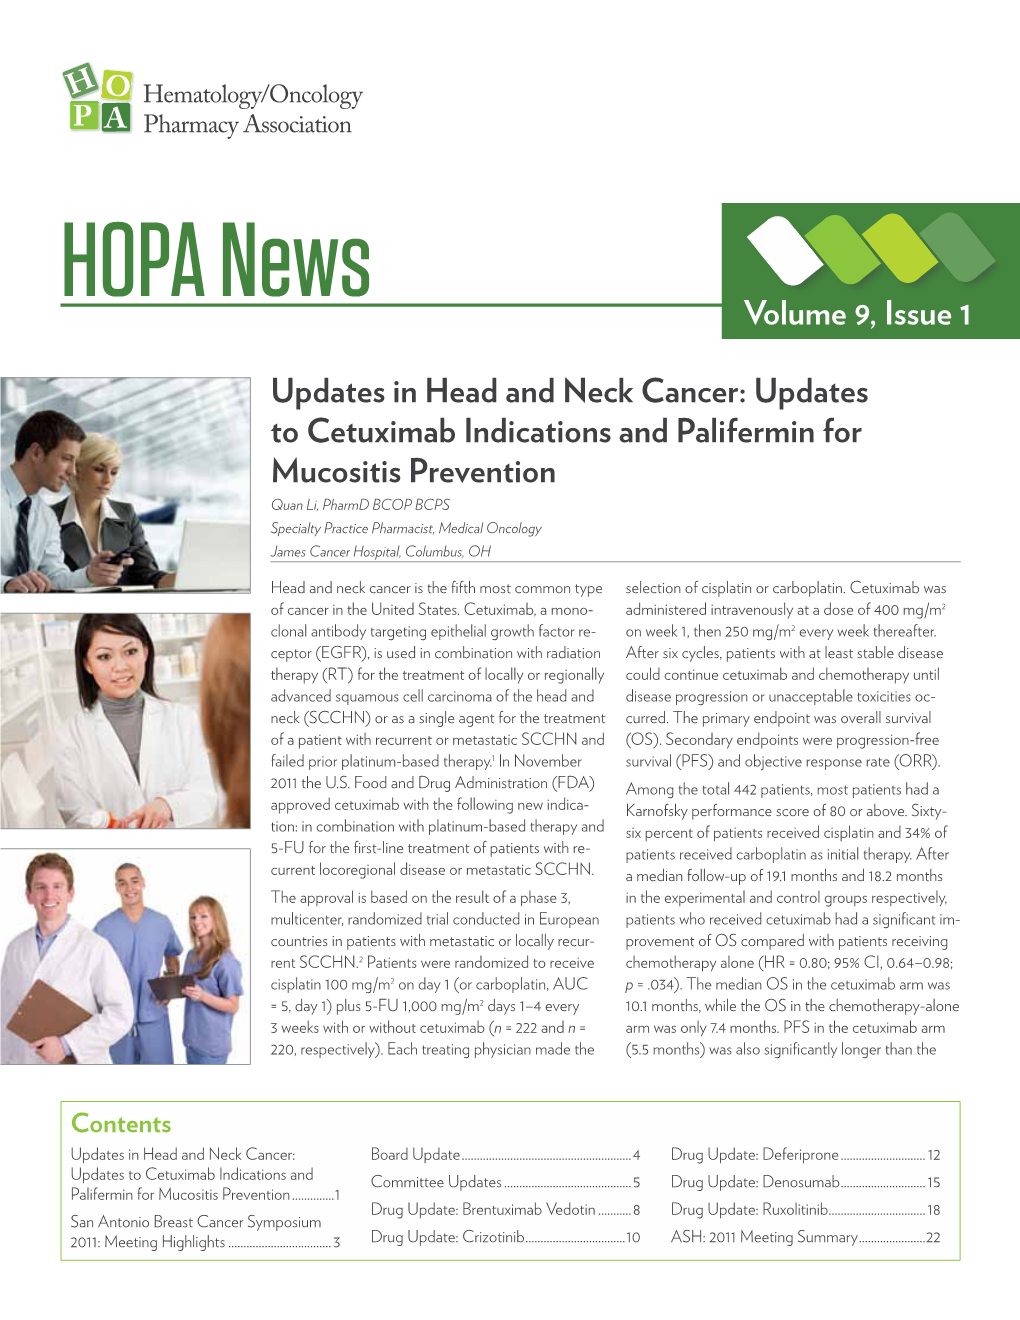 HOPA News Volume 9, Issue 1